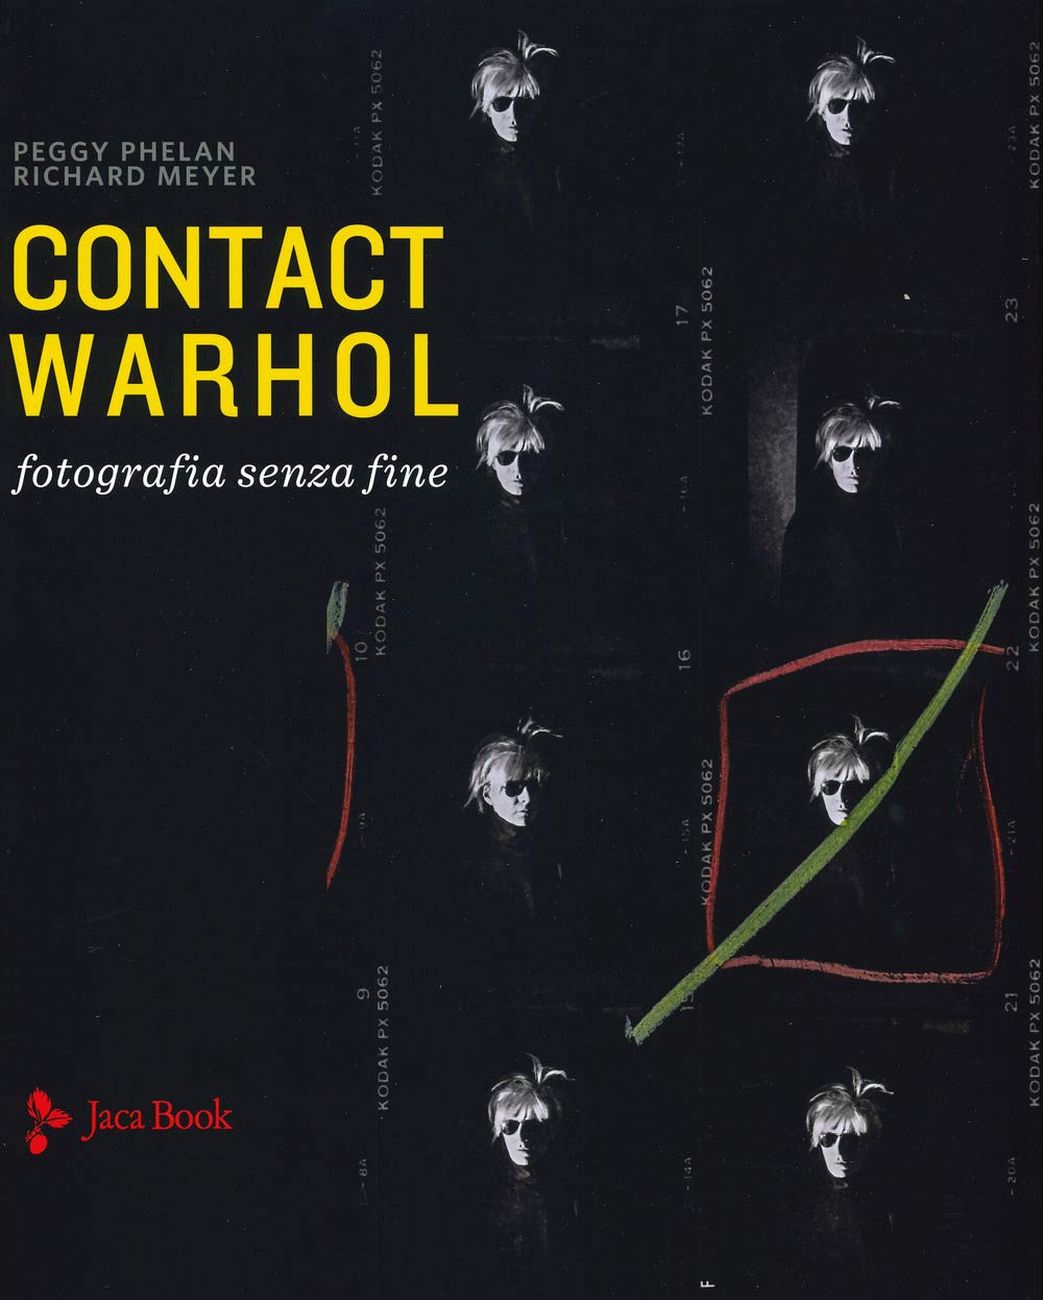 Peggy Phelan & Richard Meyer – Contact Warhol (Jaca Book, Milano 2019)